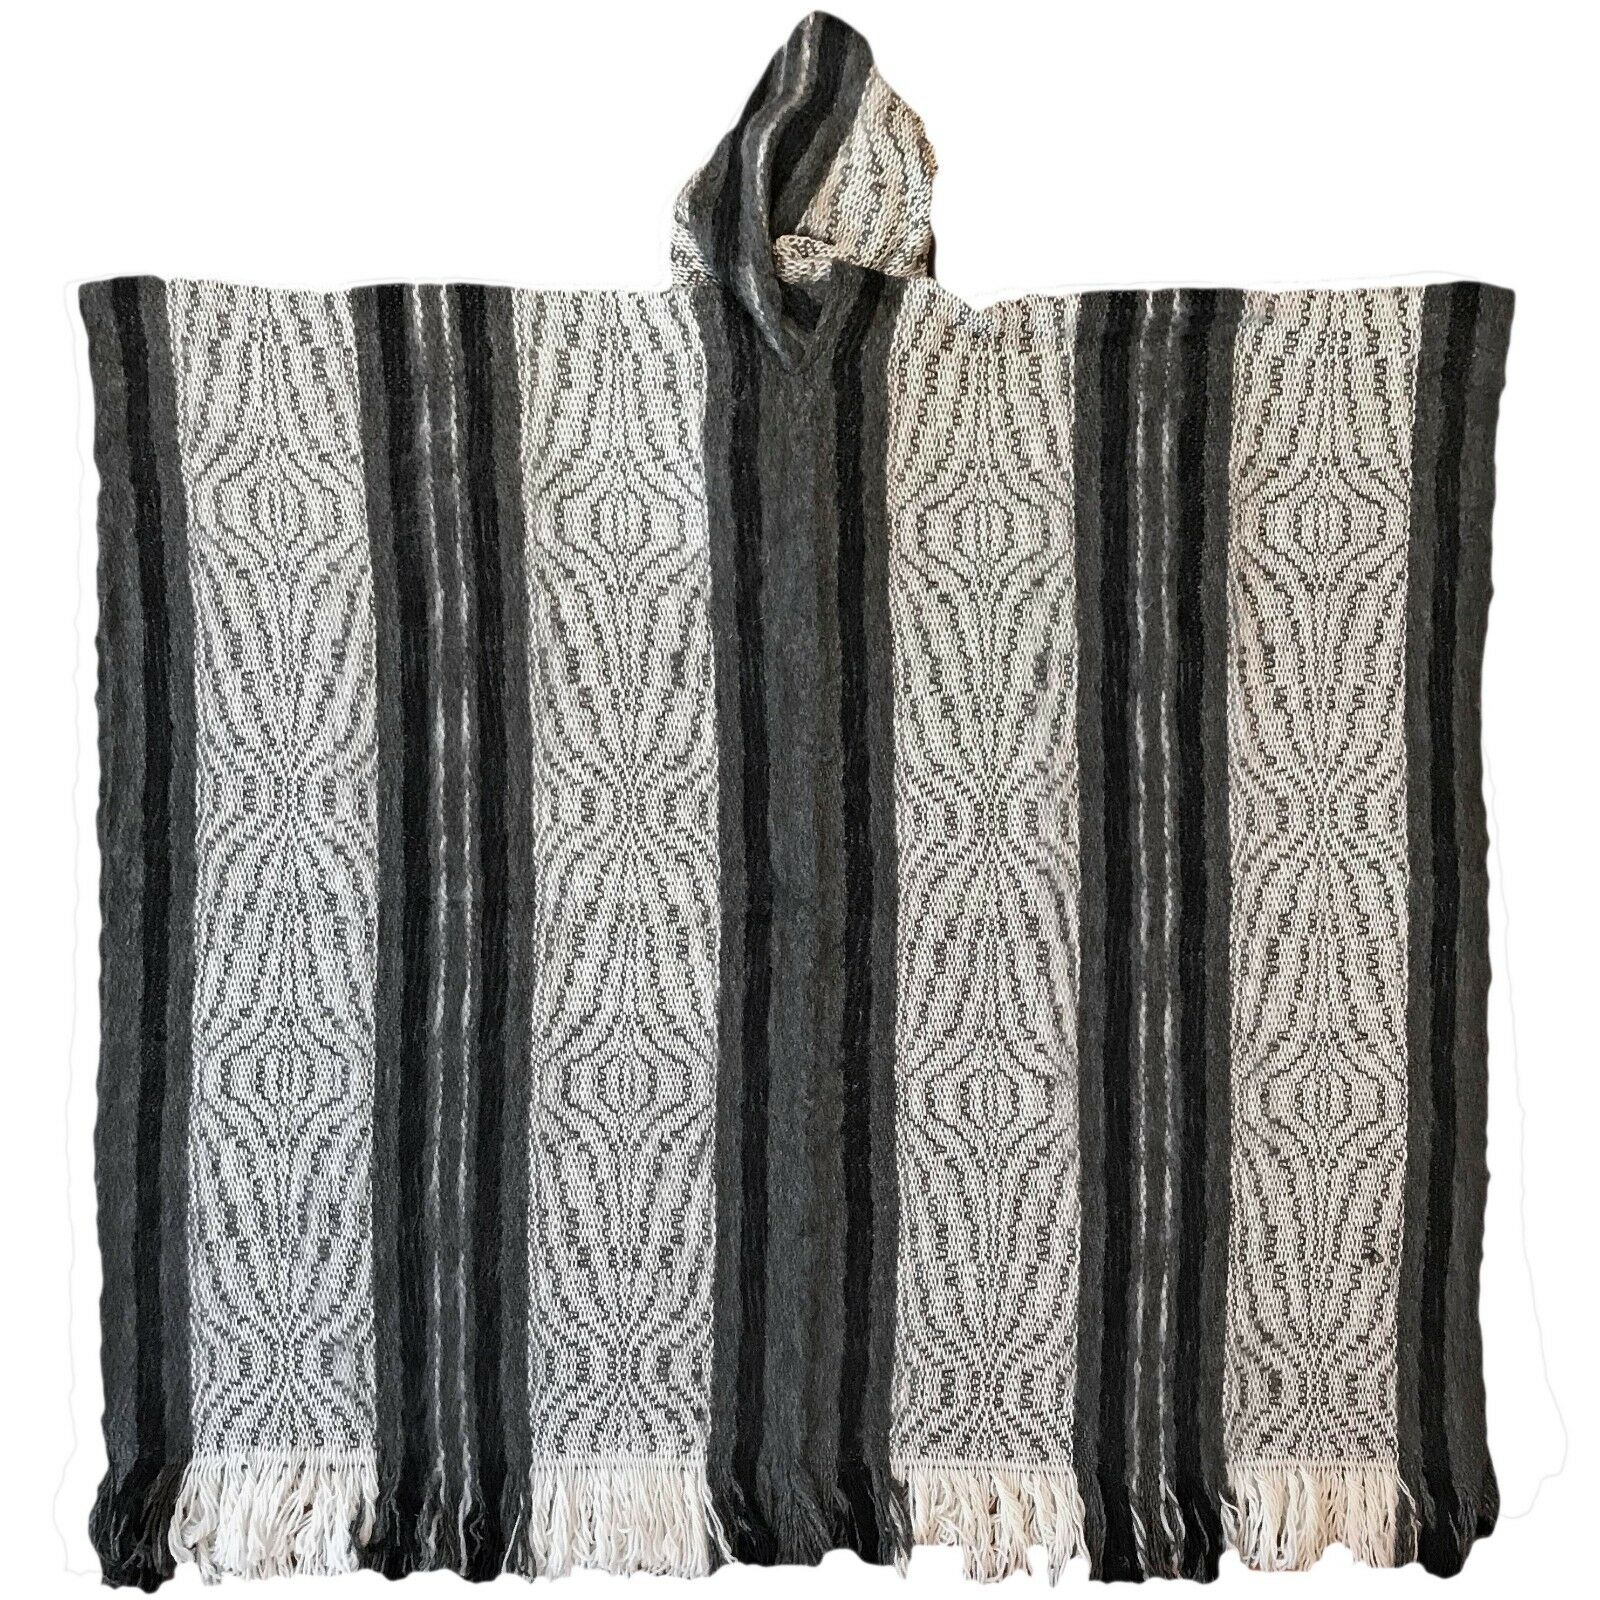 Llama Wool Unisex South American Handwoven Hooded Poncho - wavy striped pattern